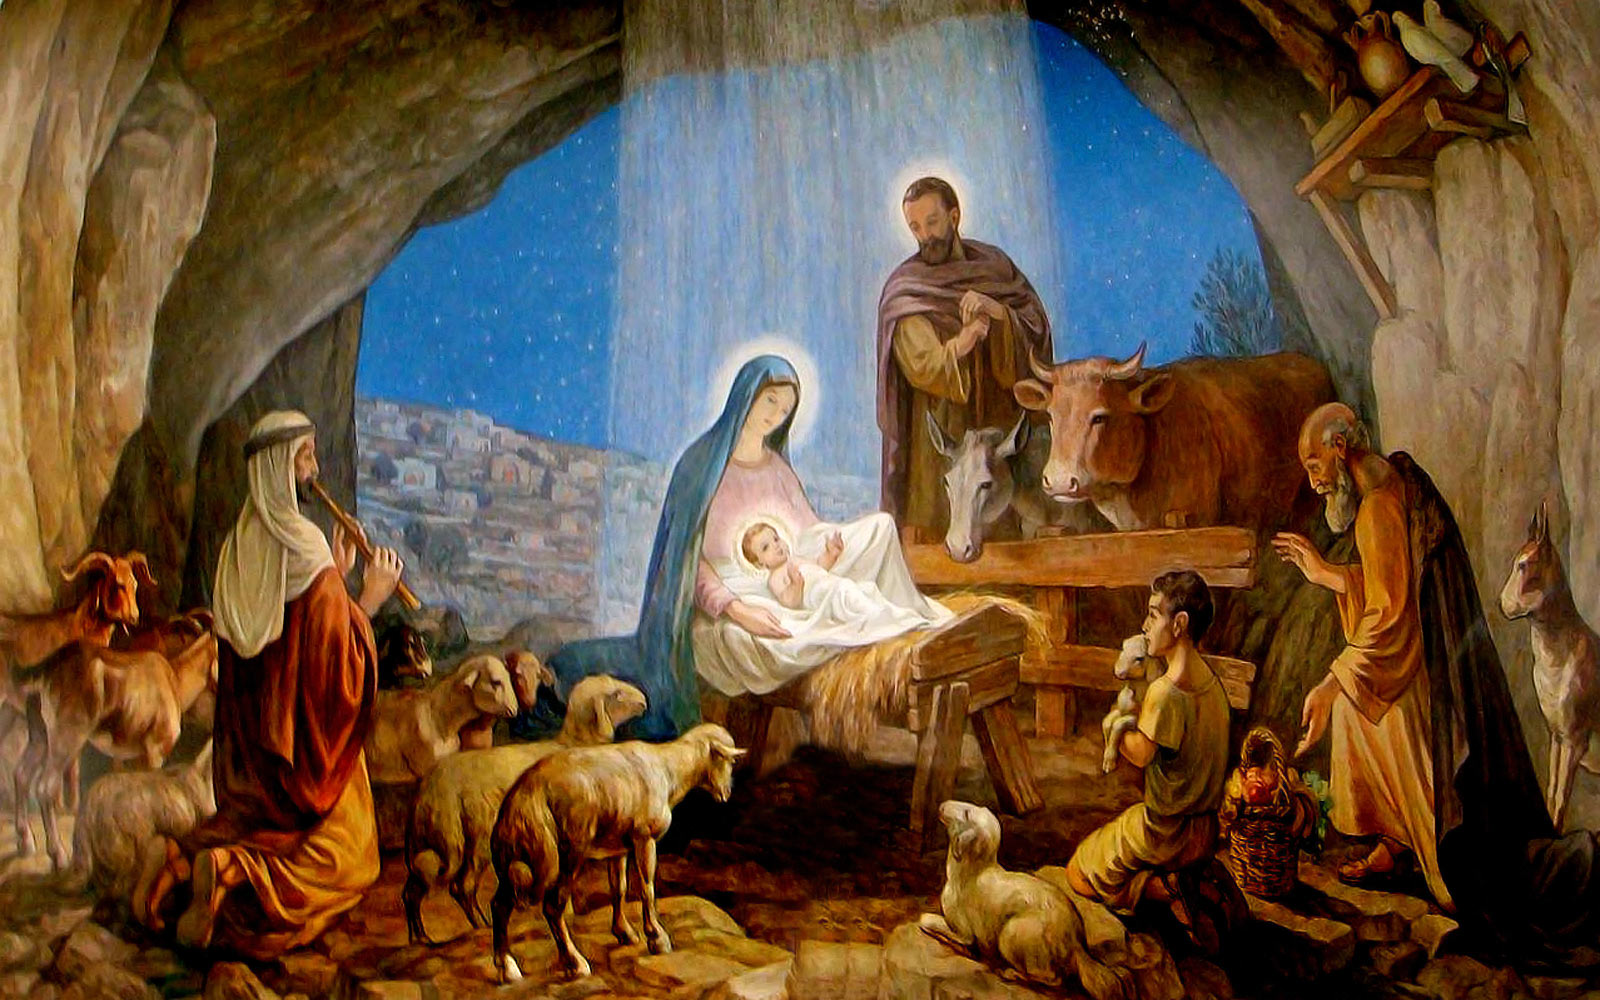 Download Celebrating Jesus's Birth at Christmas Wallpaper | Wallpapers.com